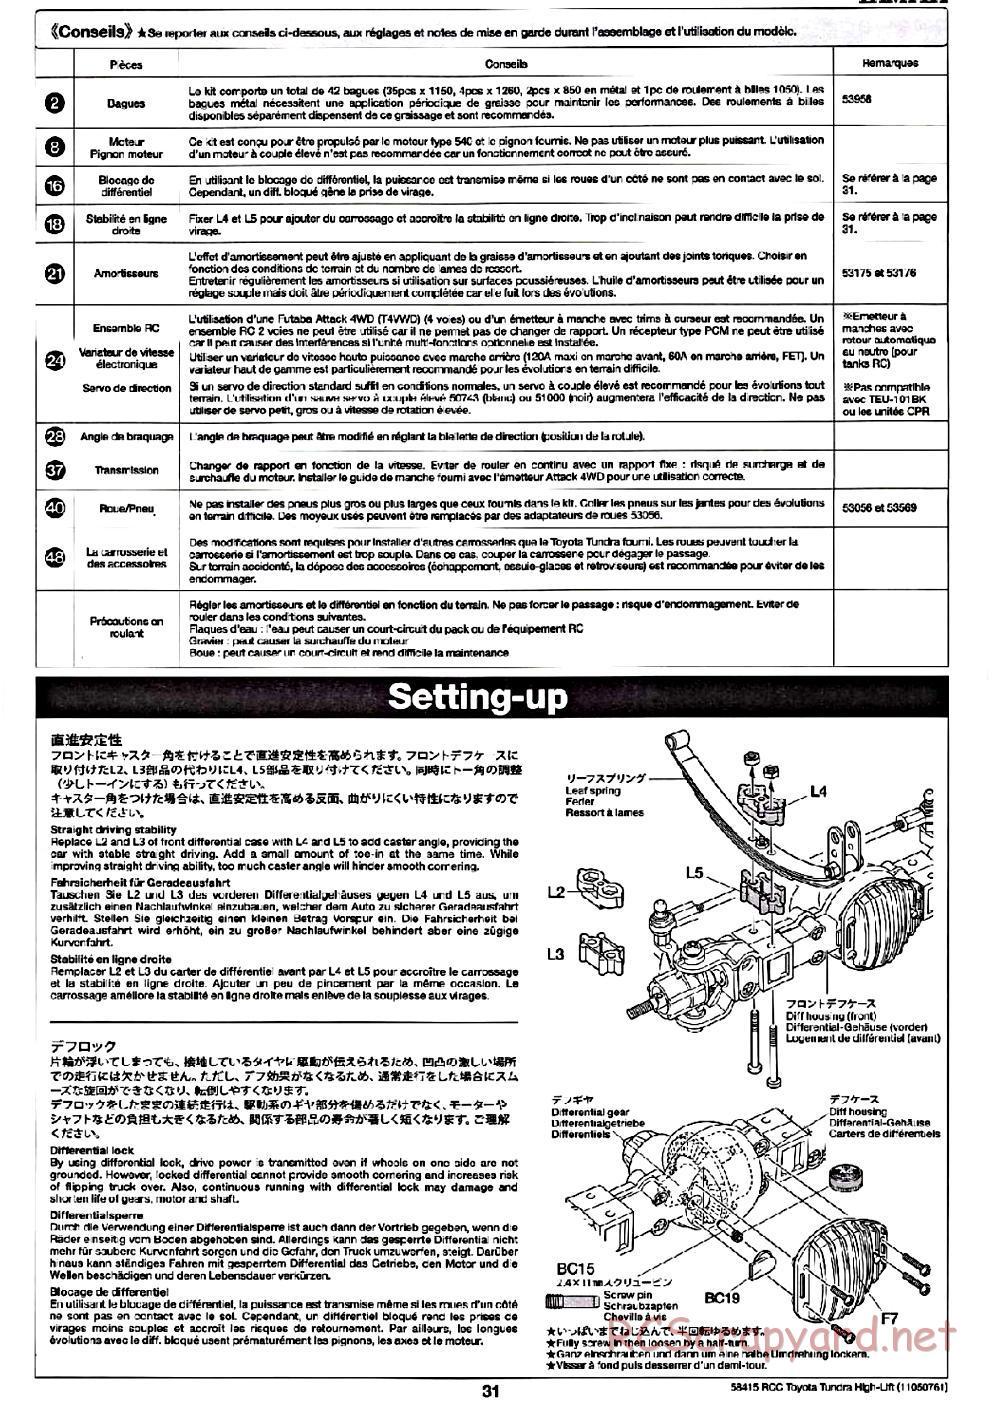 Tamiya - Toyota Tundra High-Lift Chassis - Manual - Page 31